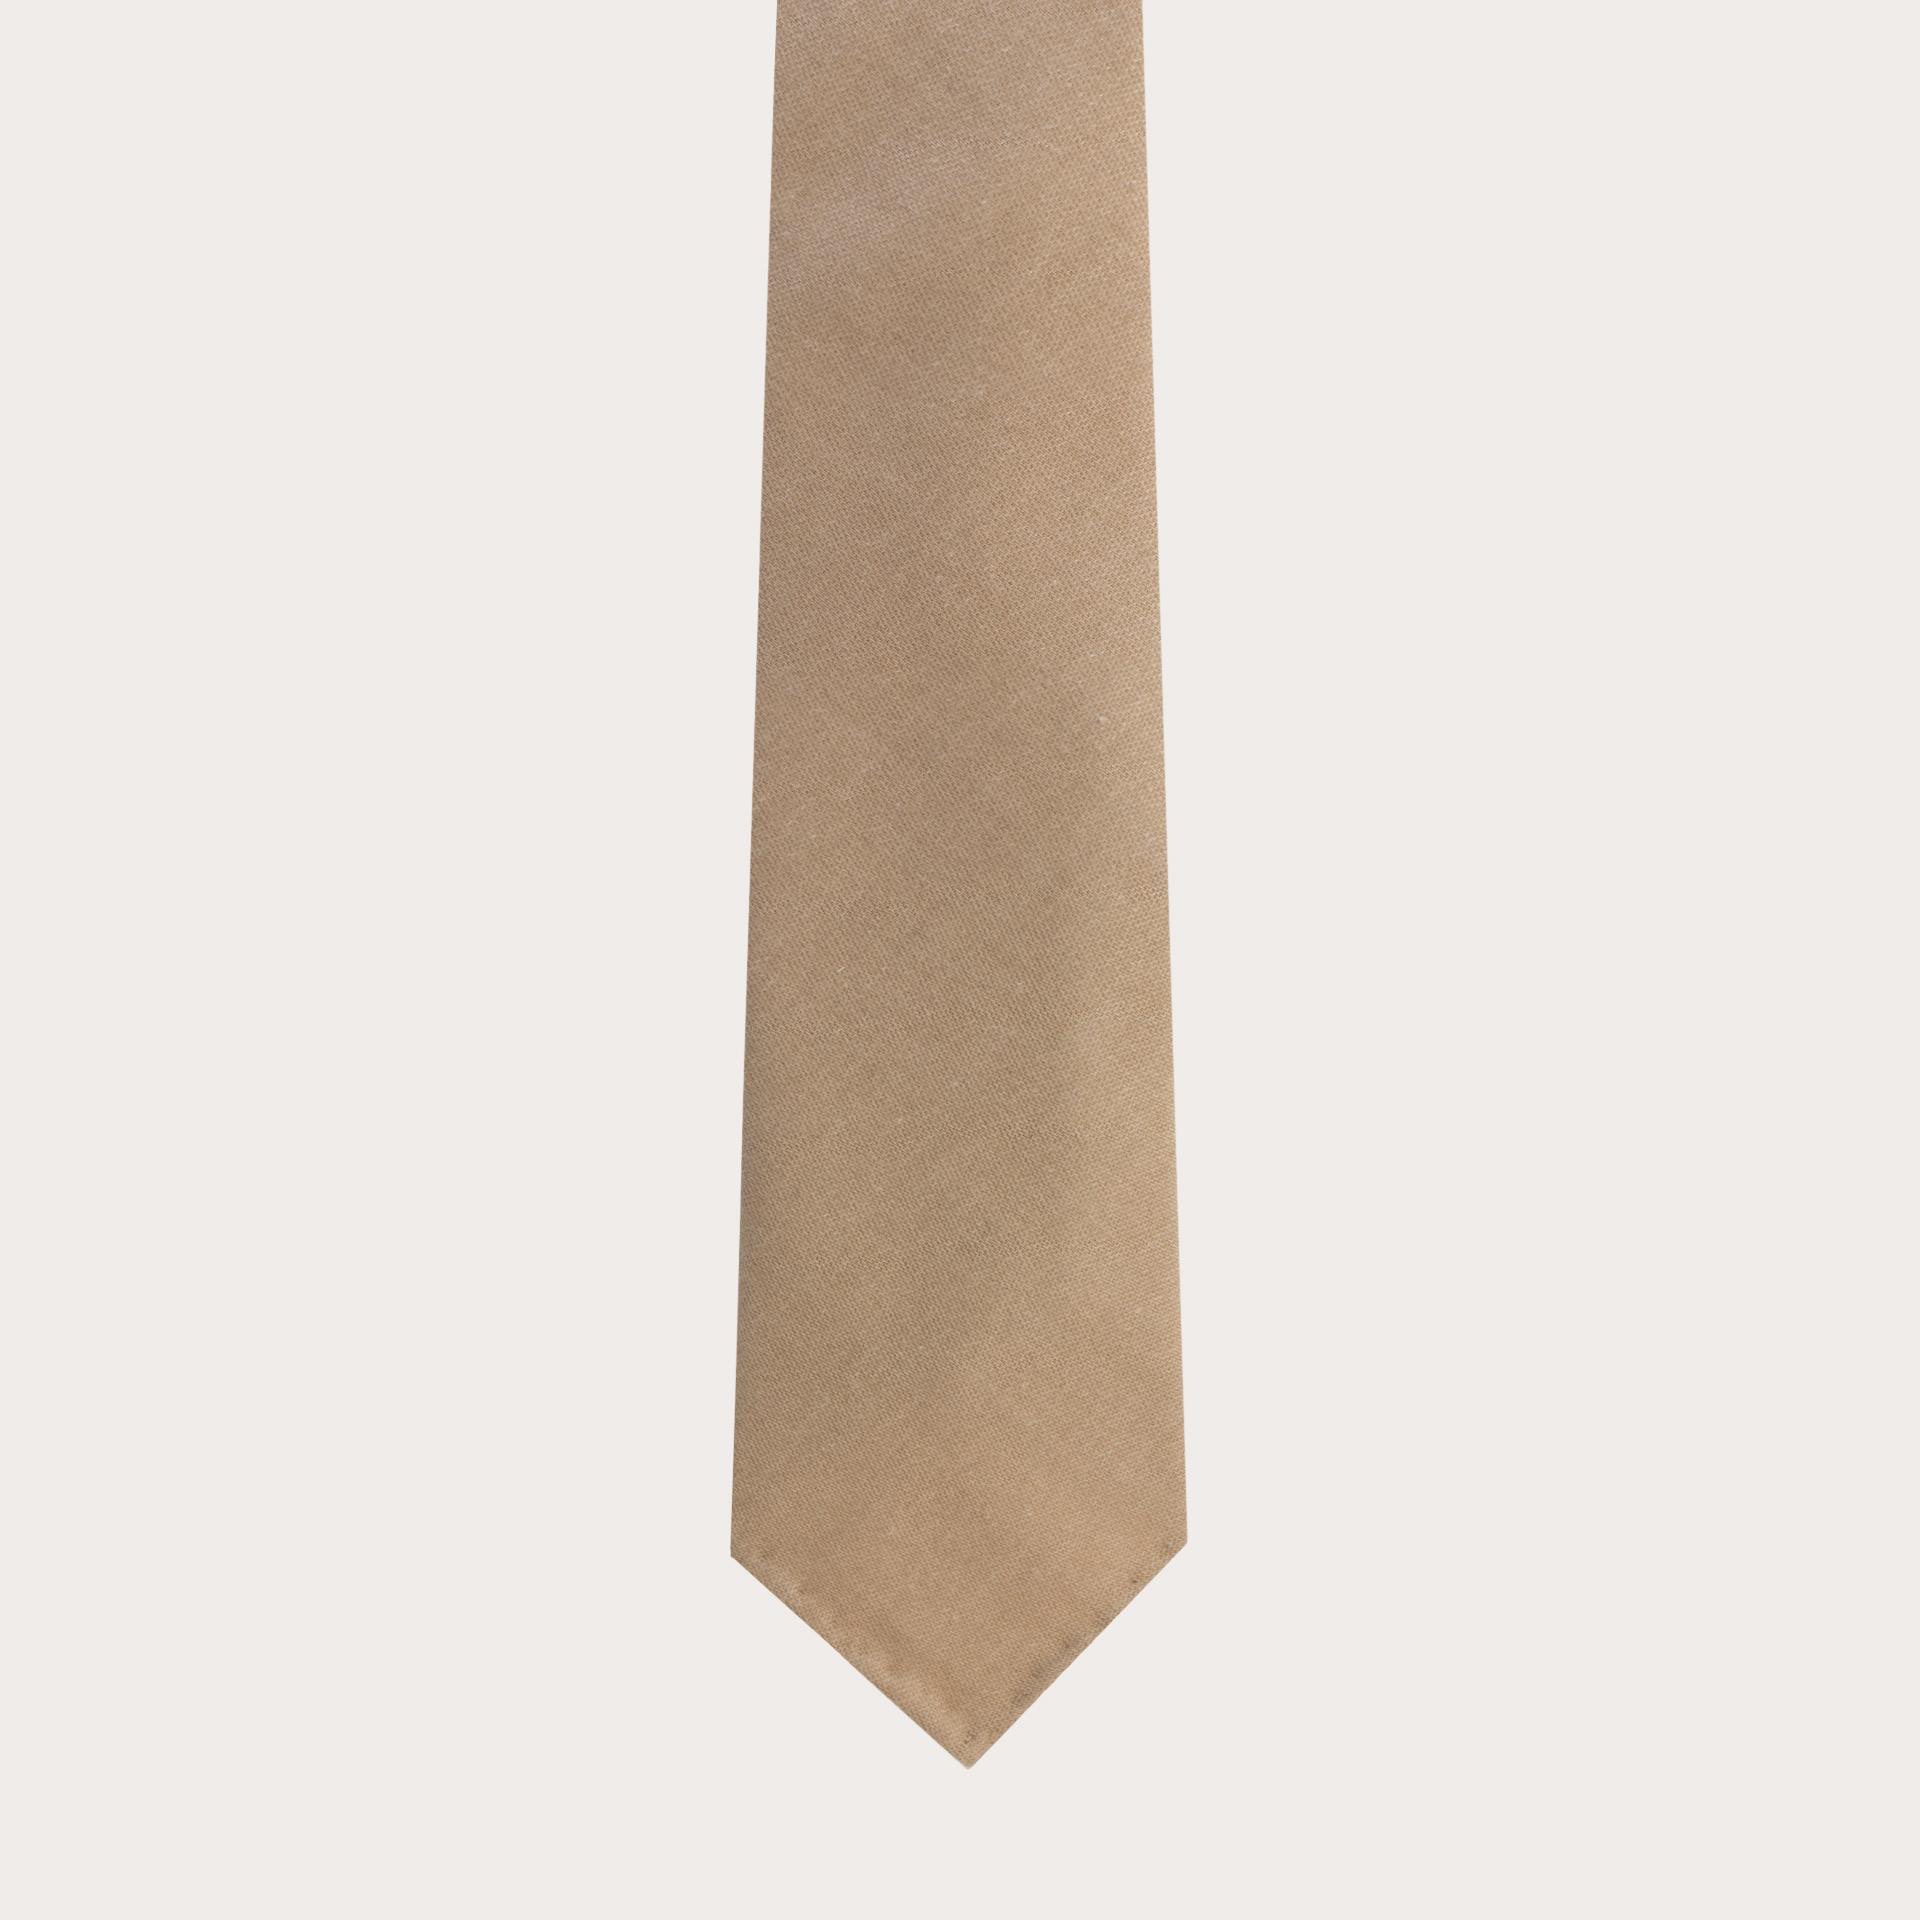 BRUCLE Ungefütterte Krawatte beige made in italy